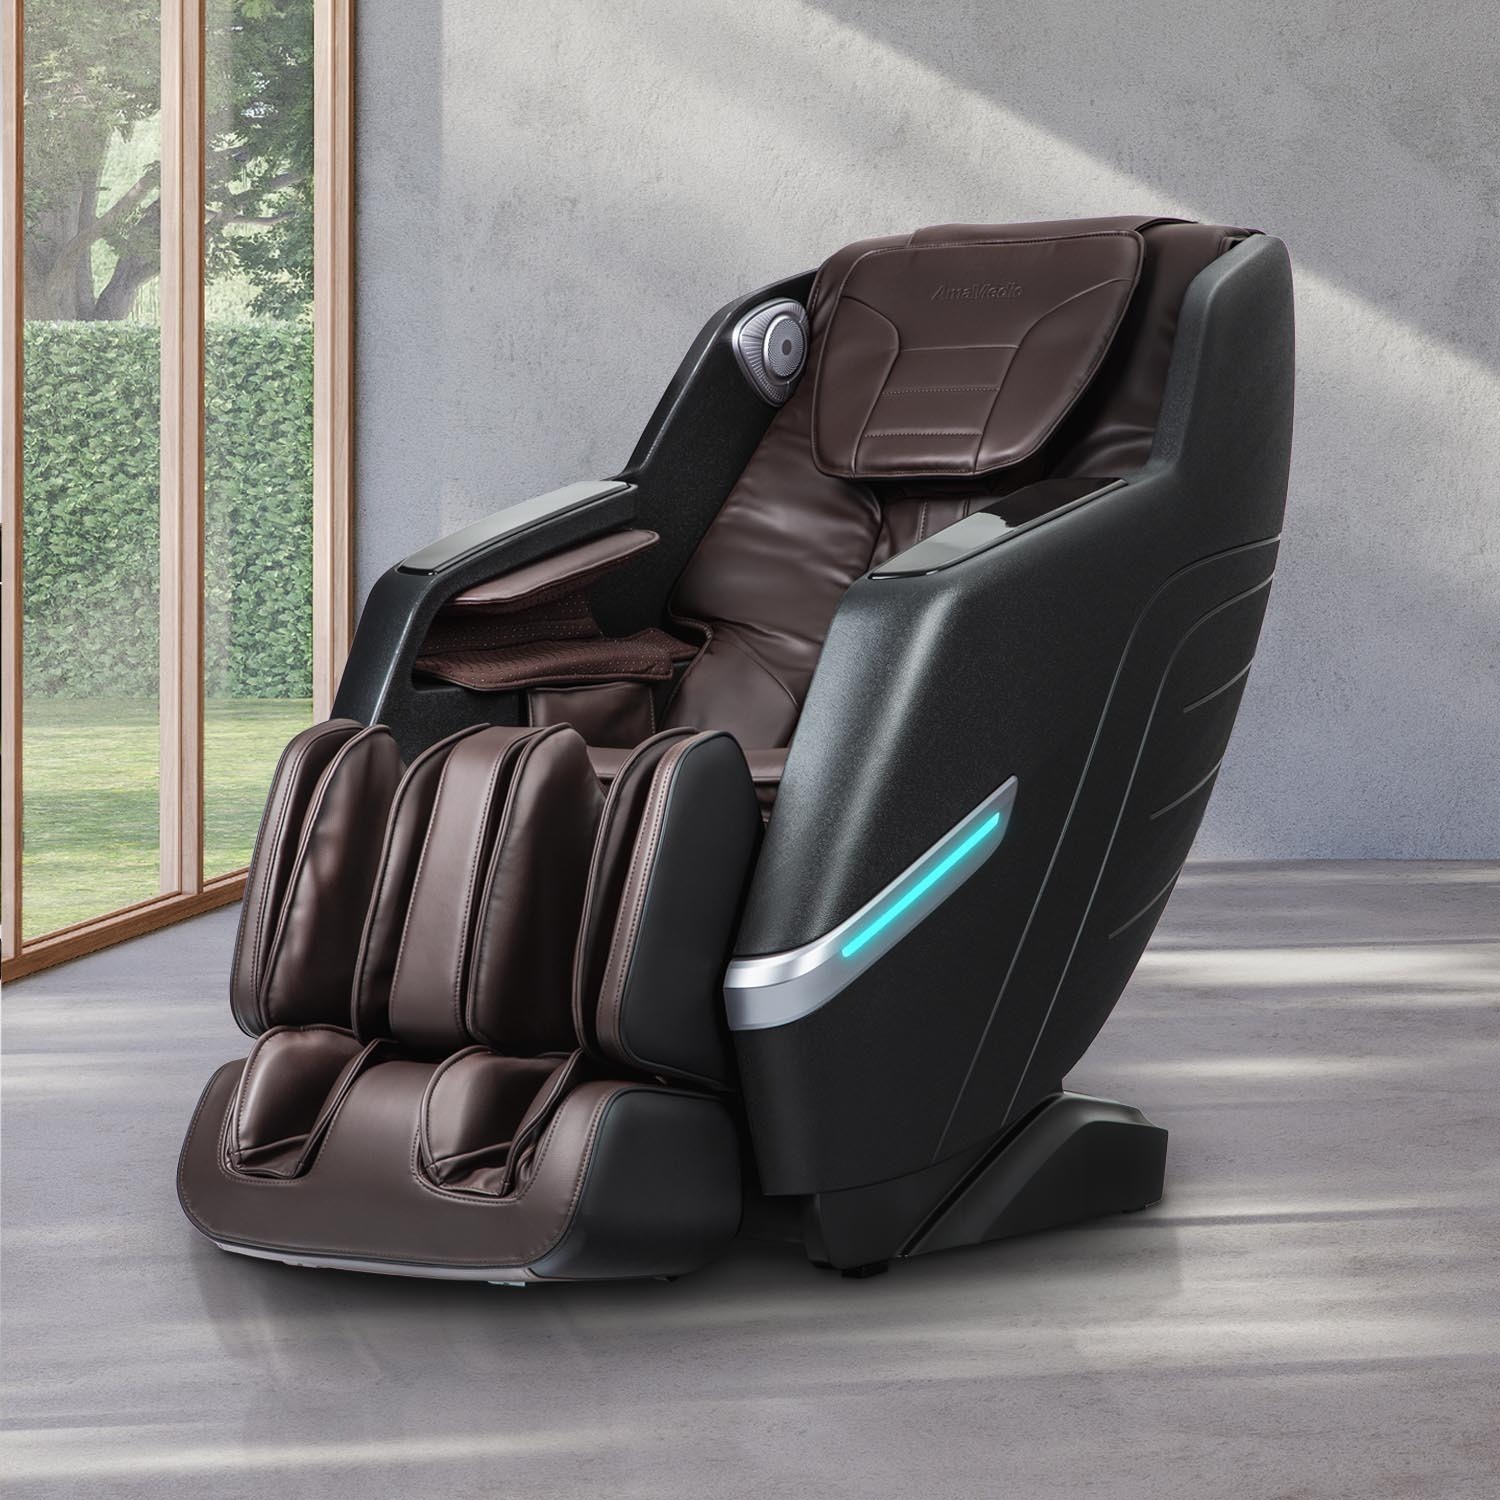 Osaki AmaMedic Silo 2D Zero Gravity Massage Chair SL w/ Foot Roller (Brown) $899 + Free Shipping